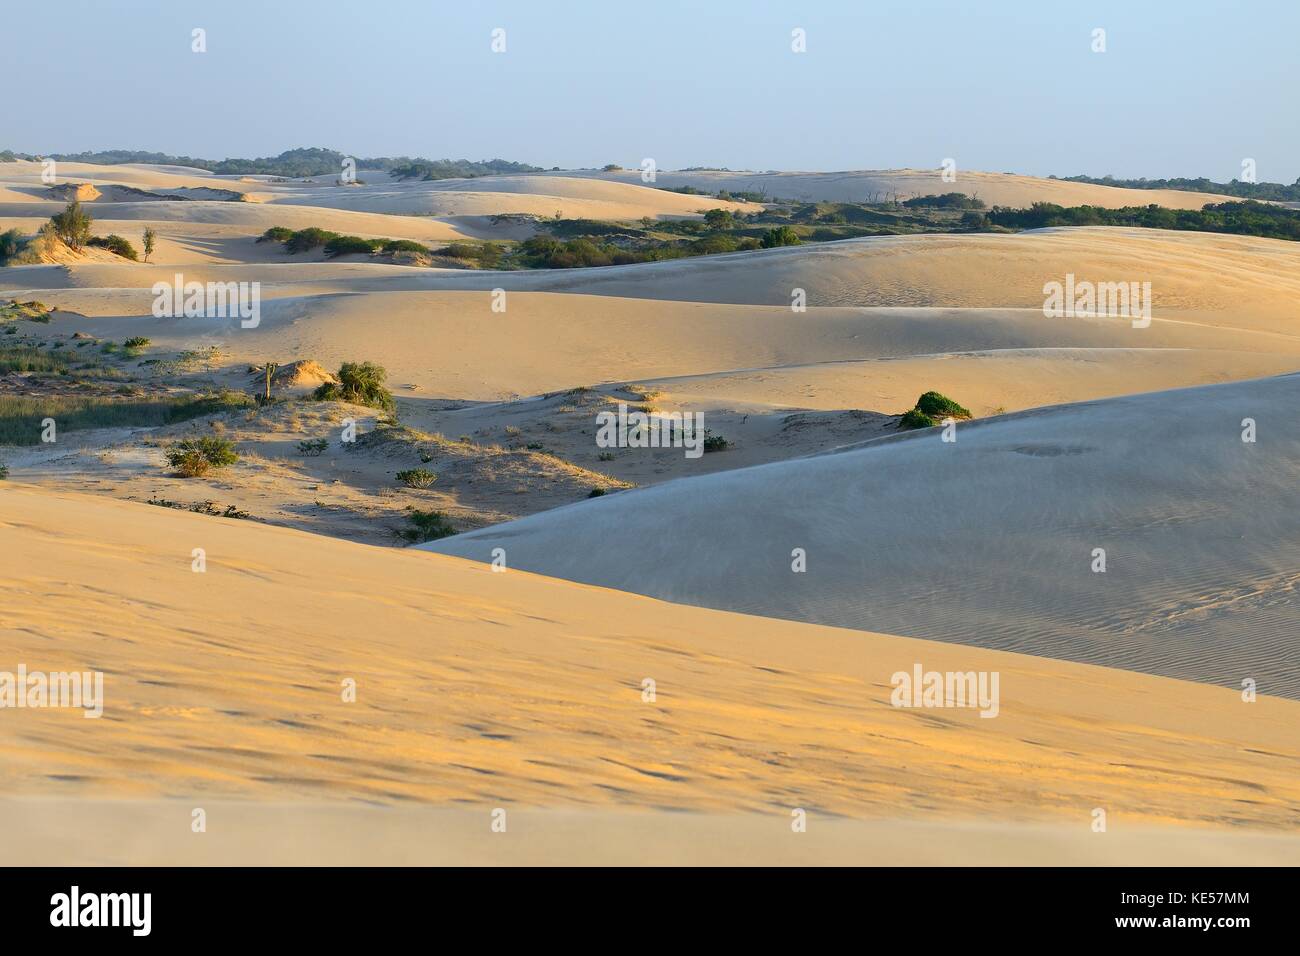 Dune di sabbia in movimento, parque regionali di Lomas de arena, Santa Cruz Santa Cruz, Bolivia Foto Stock